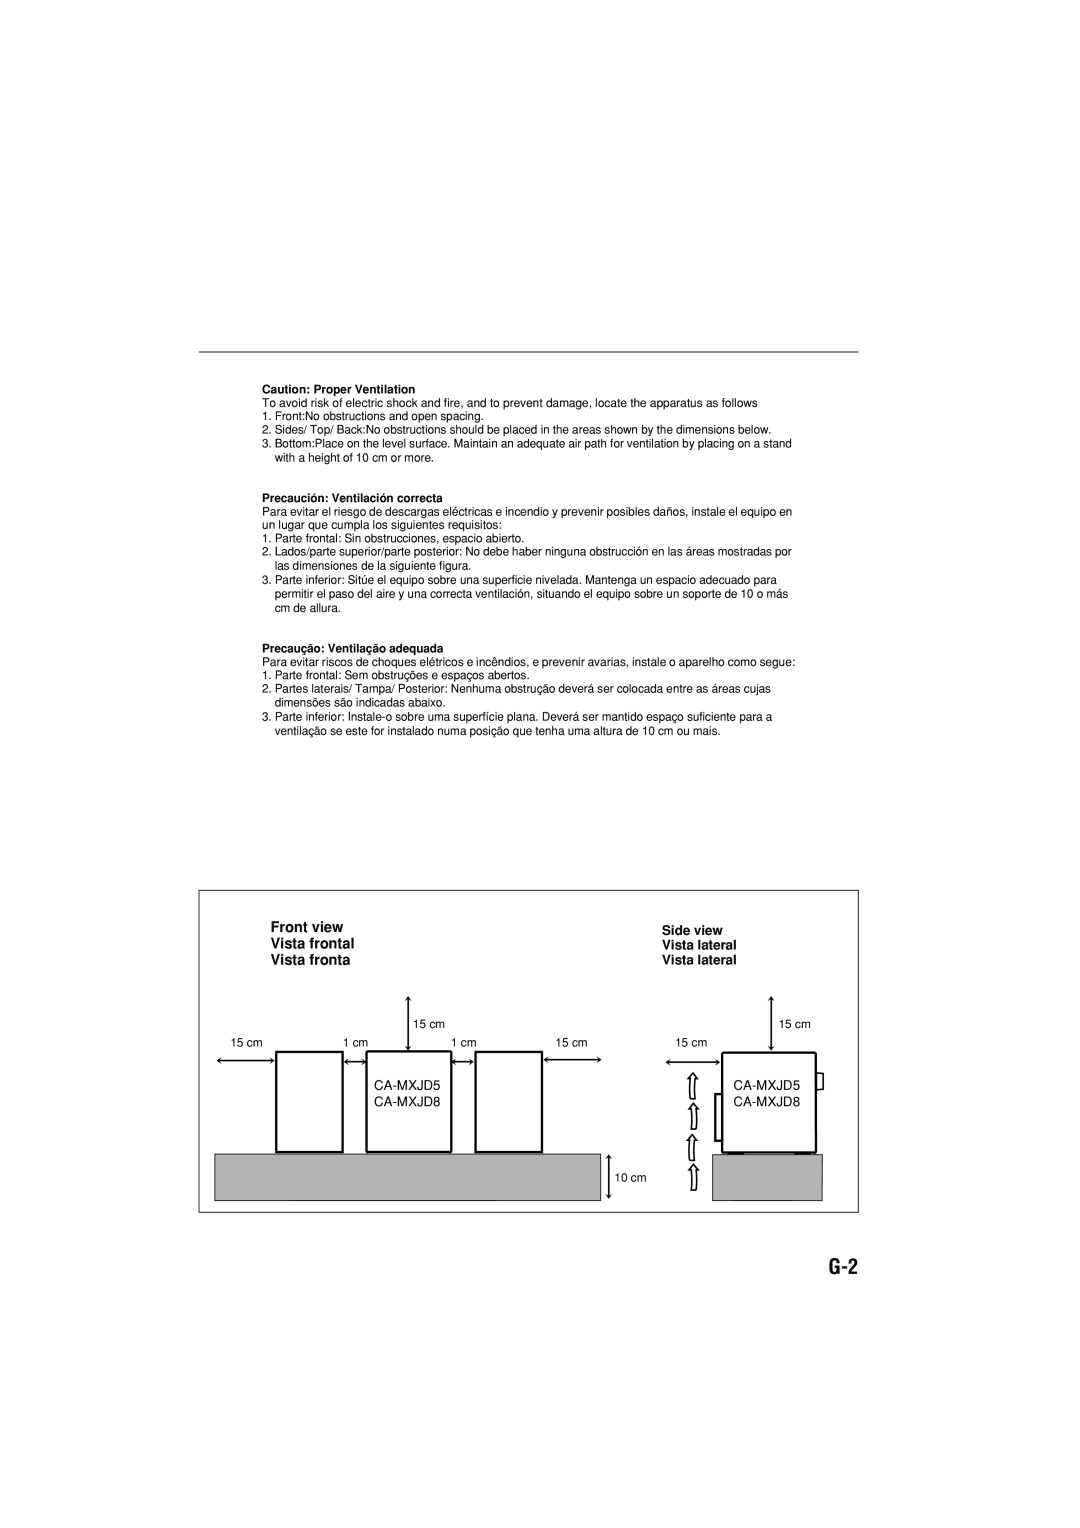 JVC CA-MXJD8 manual Front view, Vista frontal, Side view, Vista lateral, Caution: Proper Ventilation 